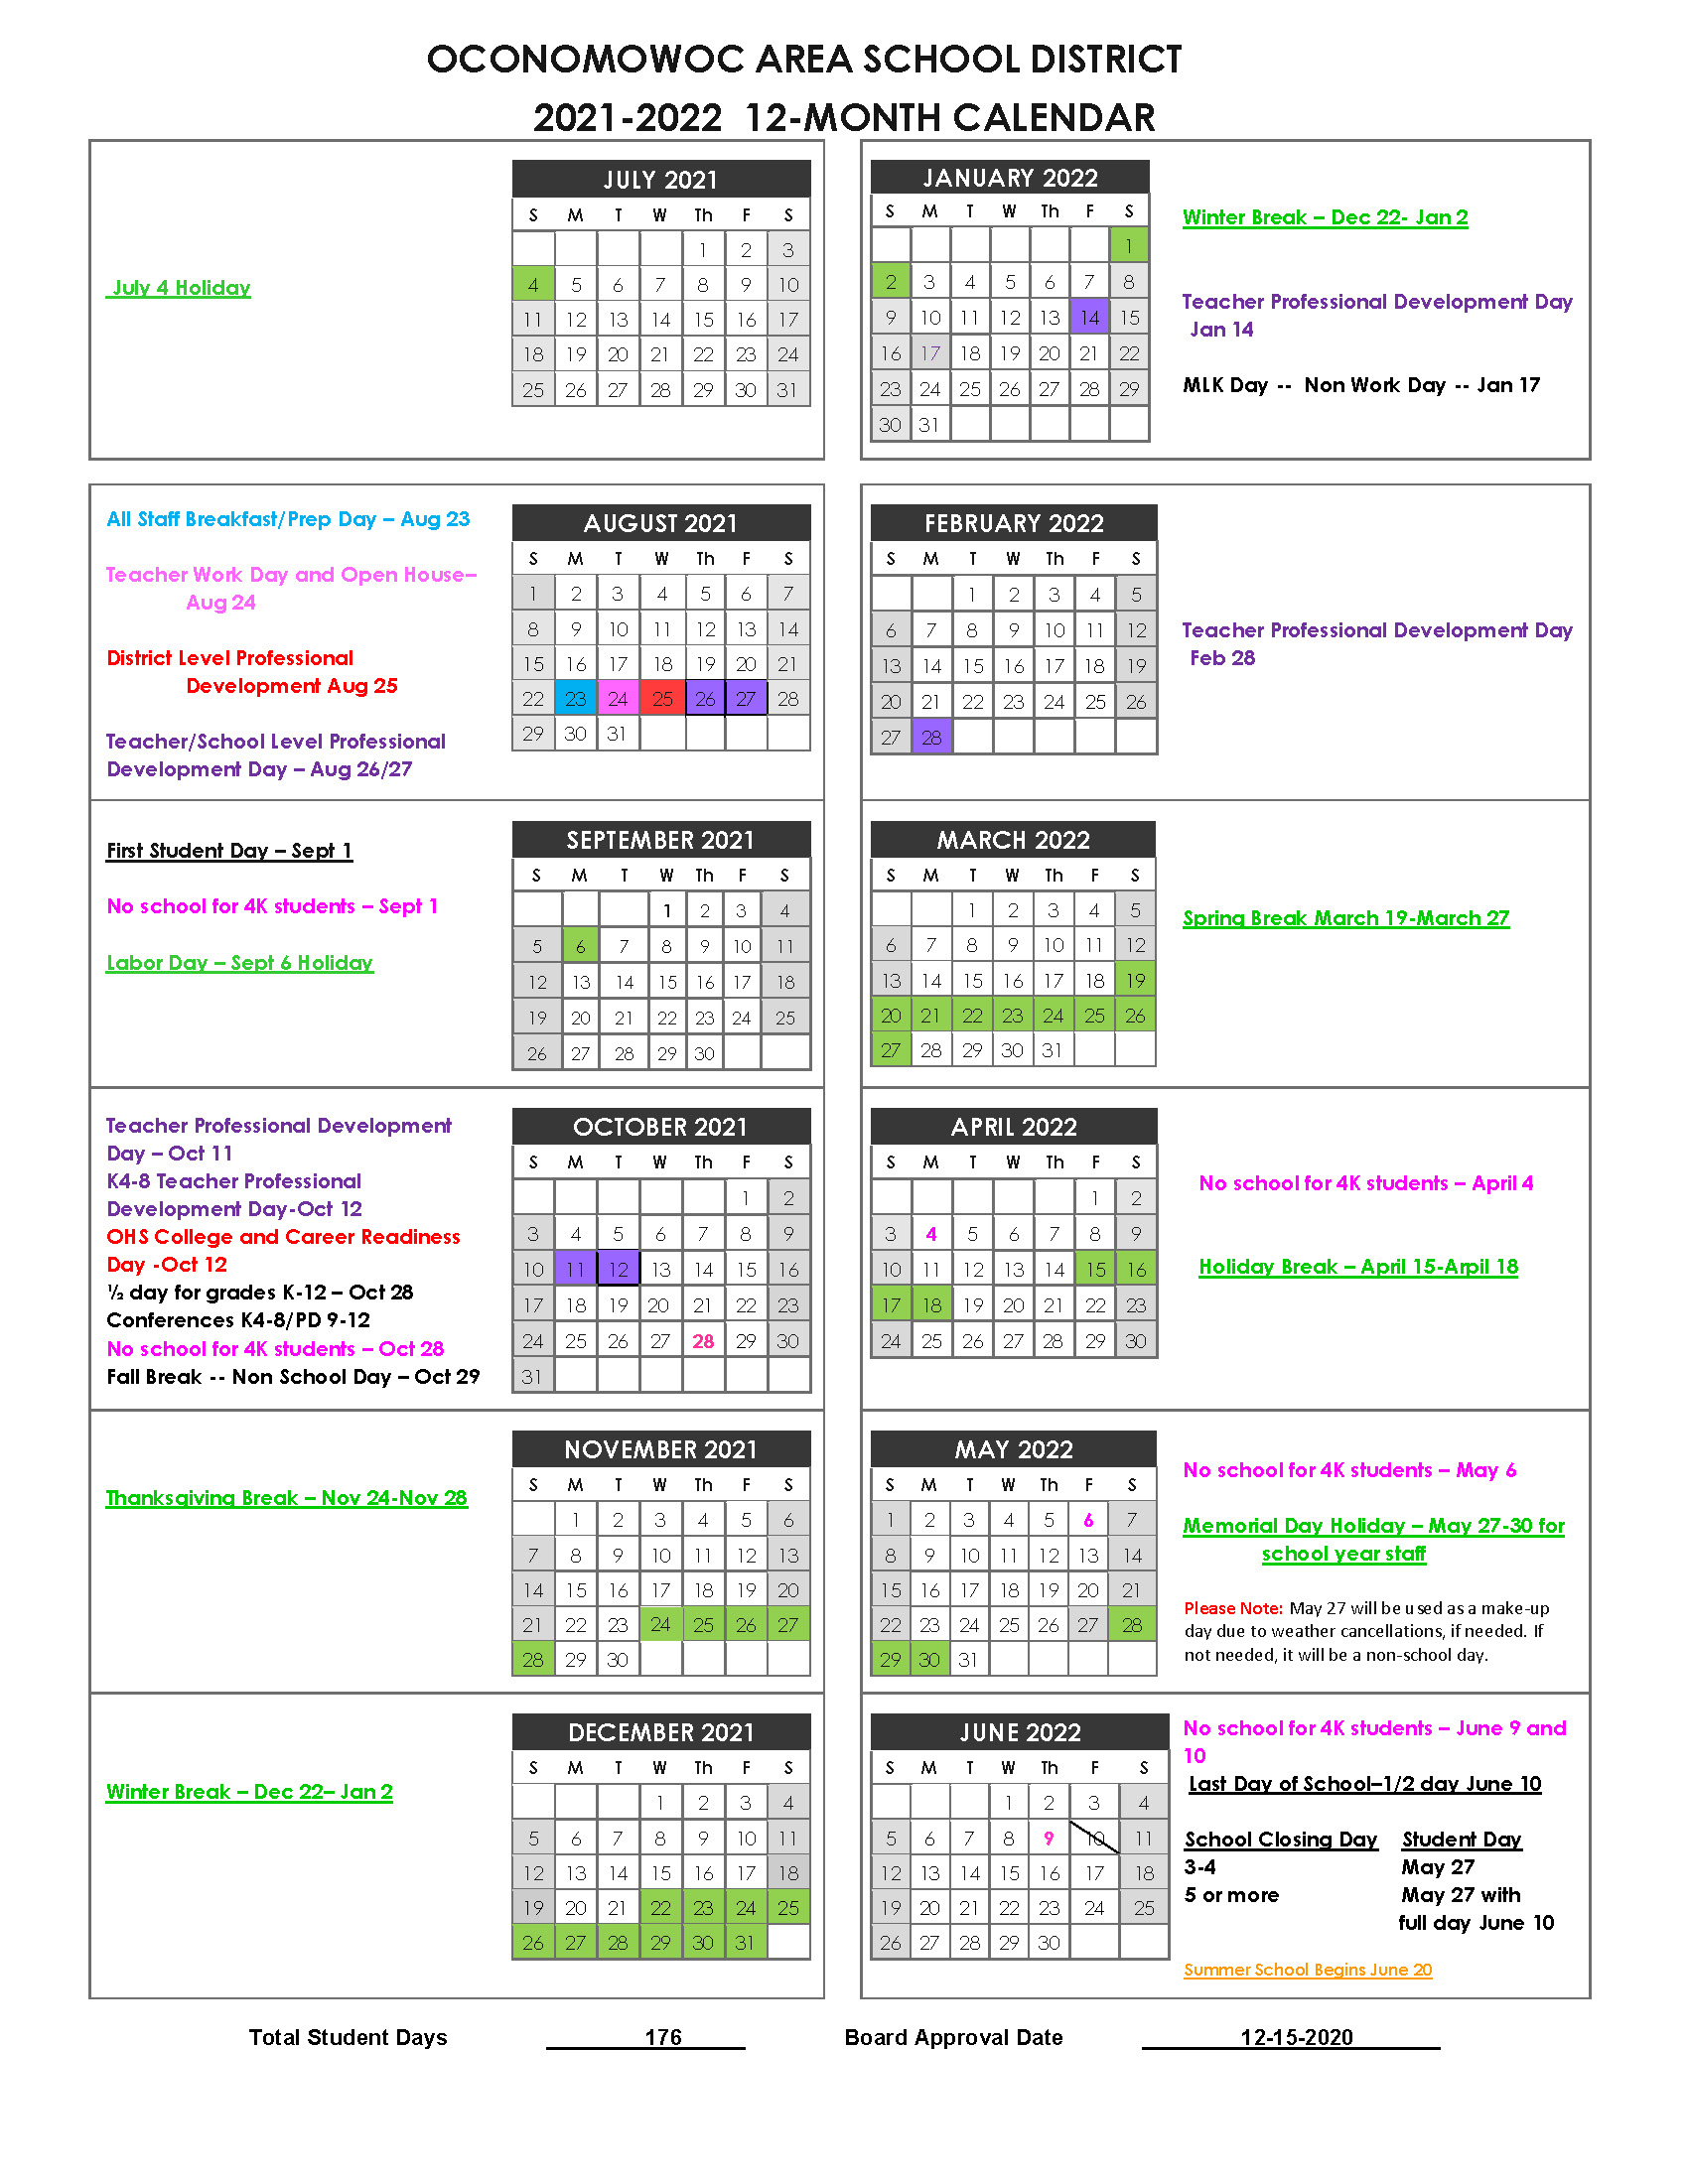 Oconomowoc School Calendar 2022